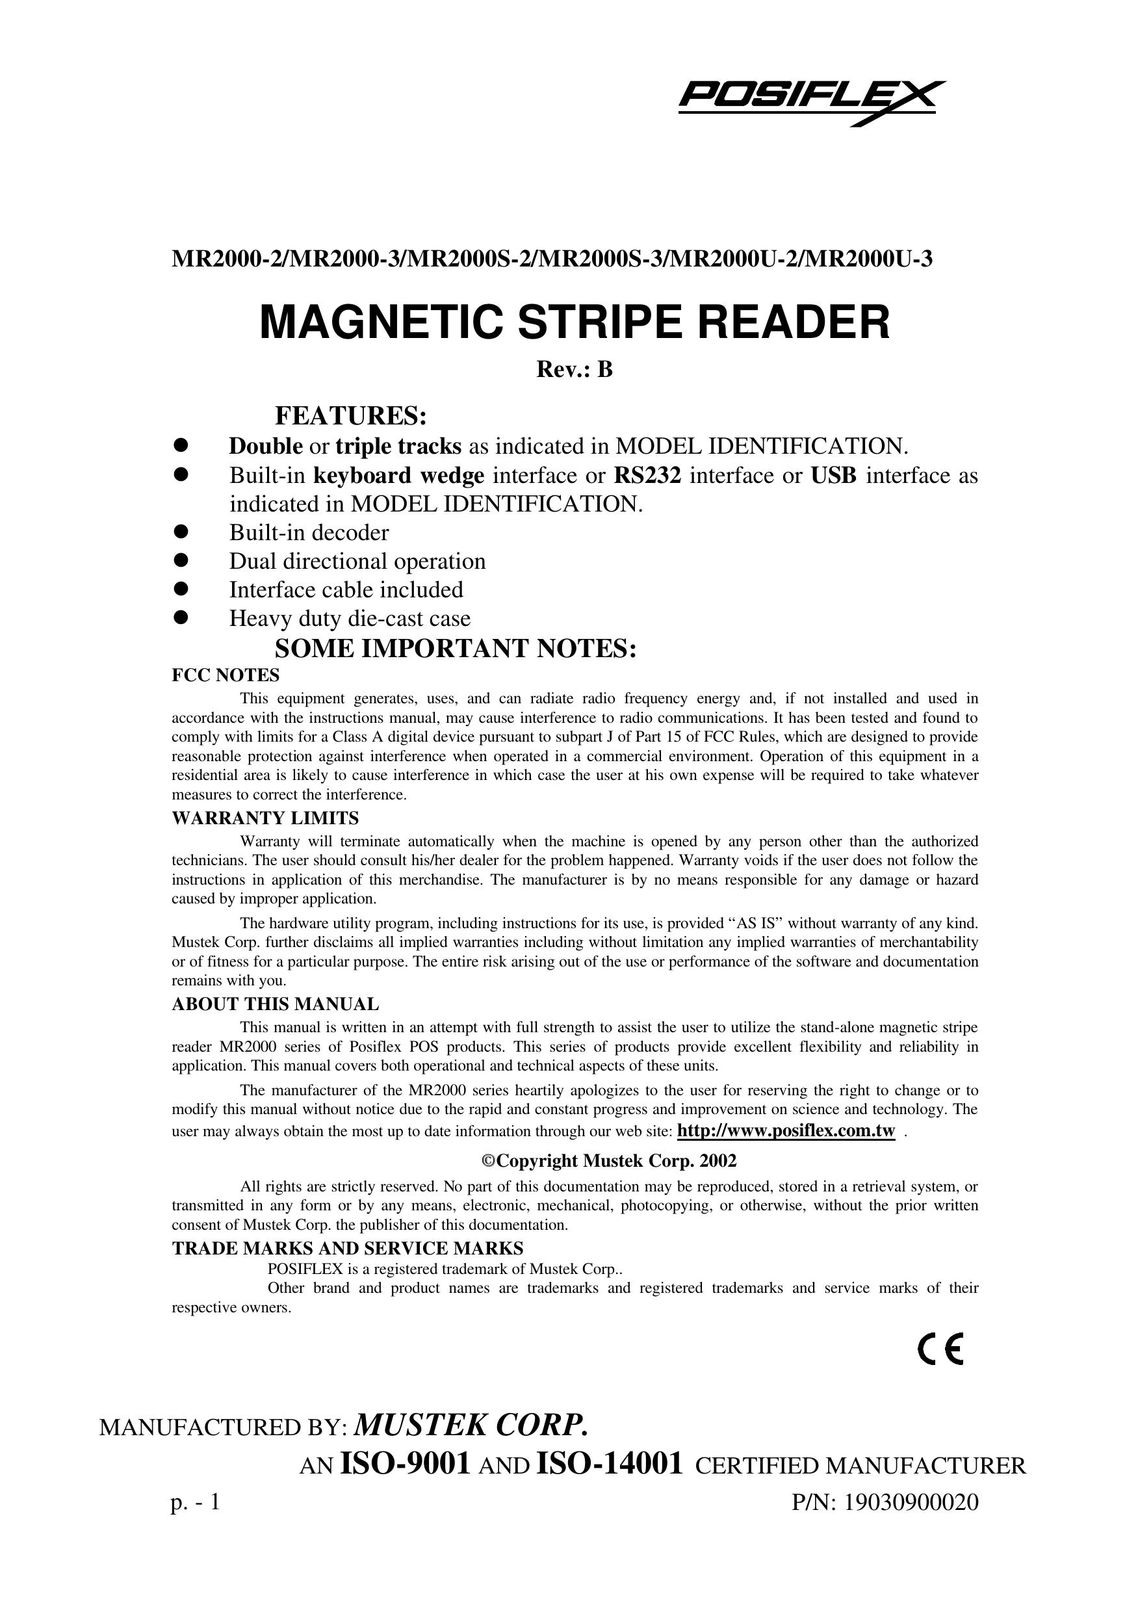 POSIFLEX Business Machines MR2000-3 Barcode Reader User Manual